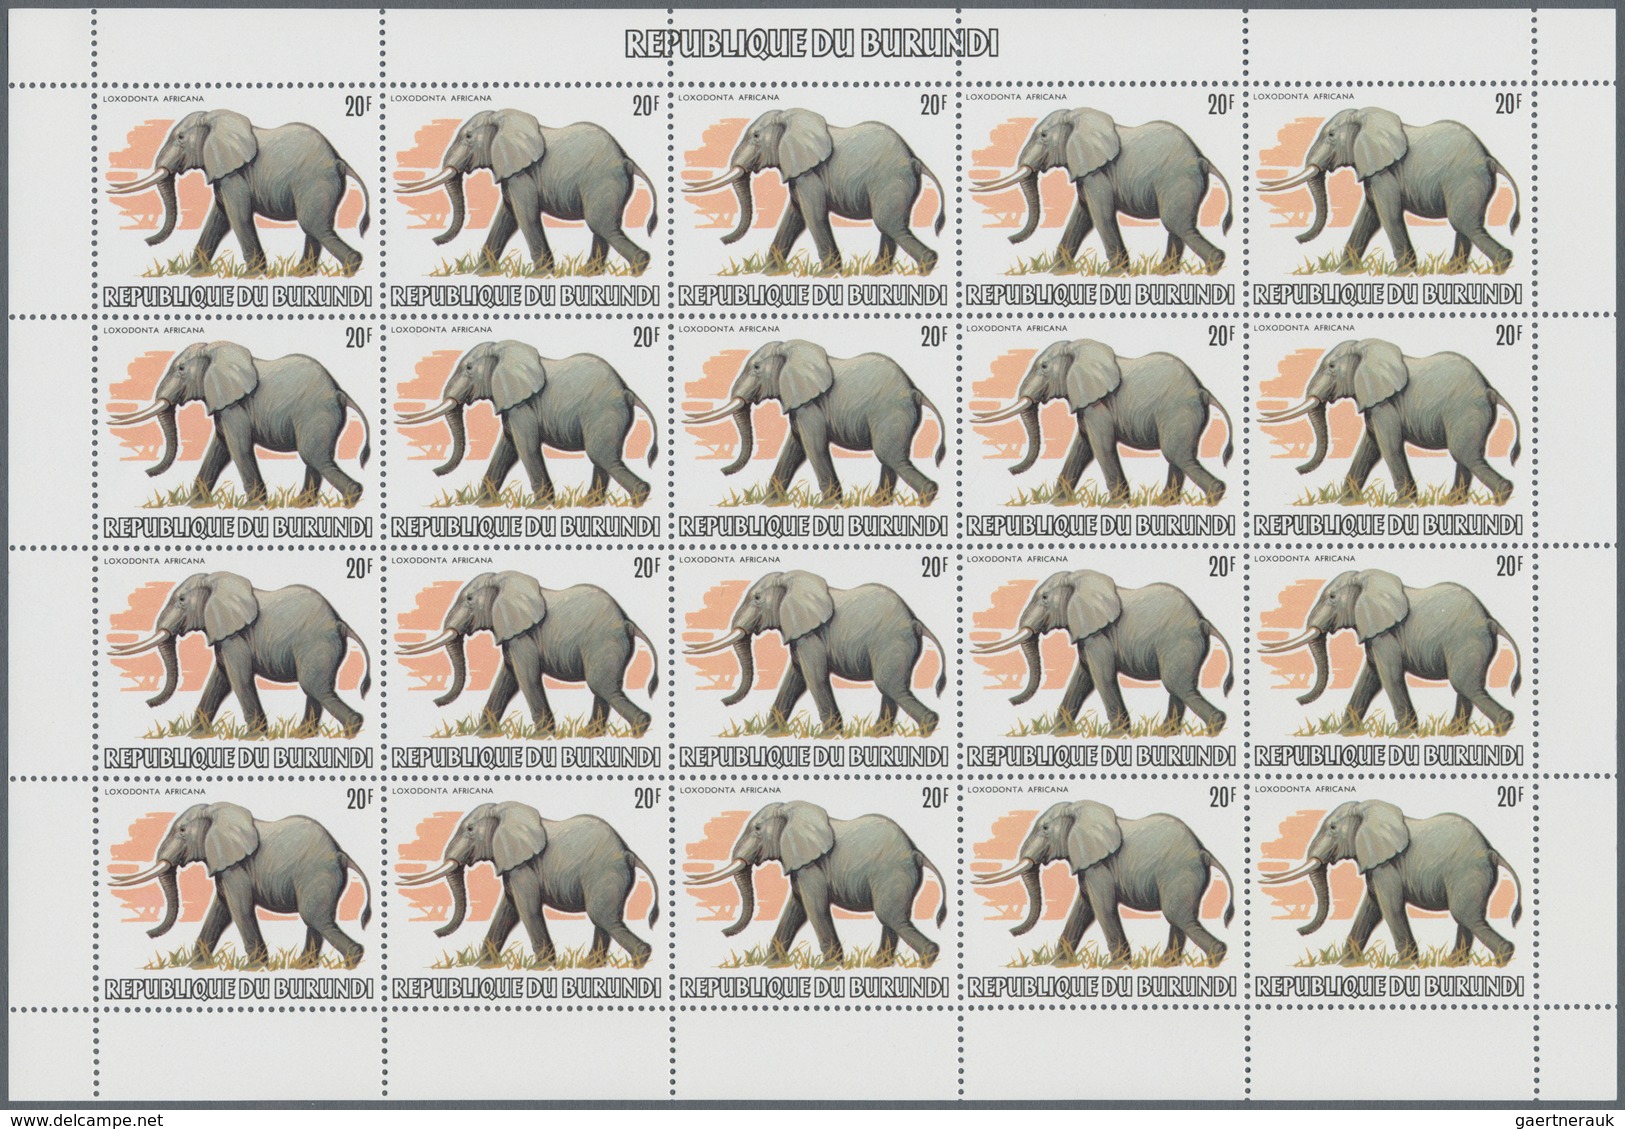 00672 Thematik: Tiere, Fauna / animals, fauna: 1982, Burundi. ANIMALS. Set of 13 values in complete sheets